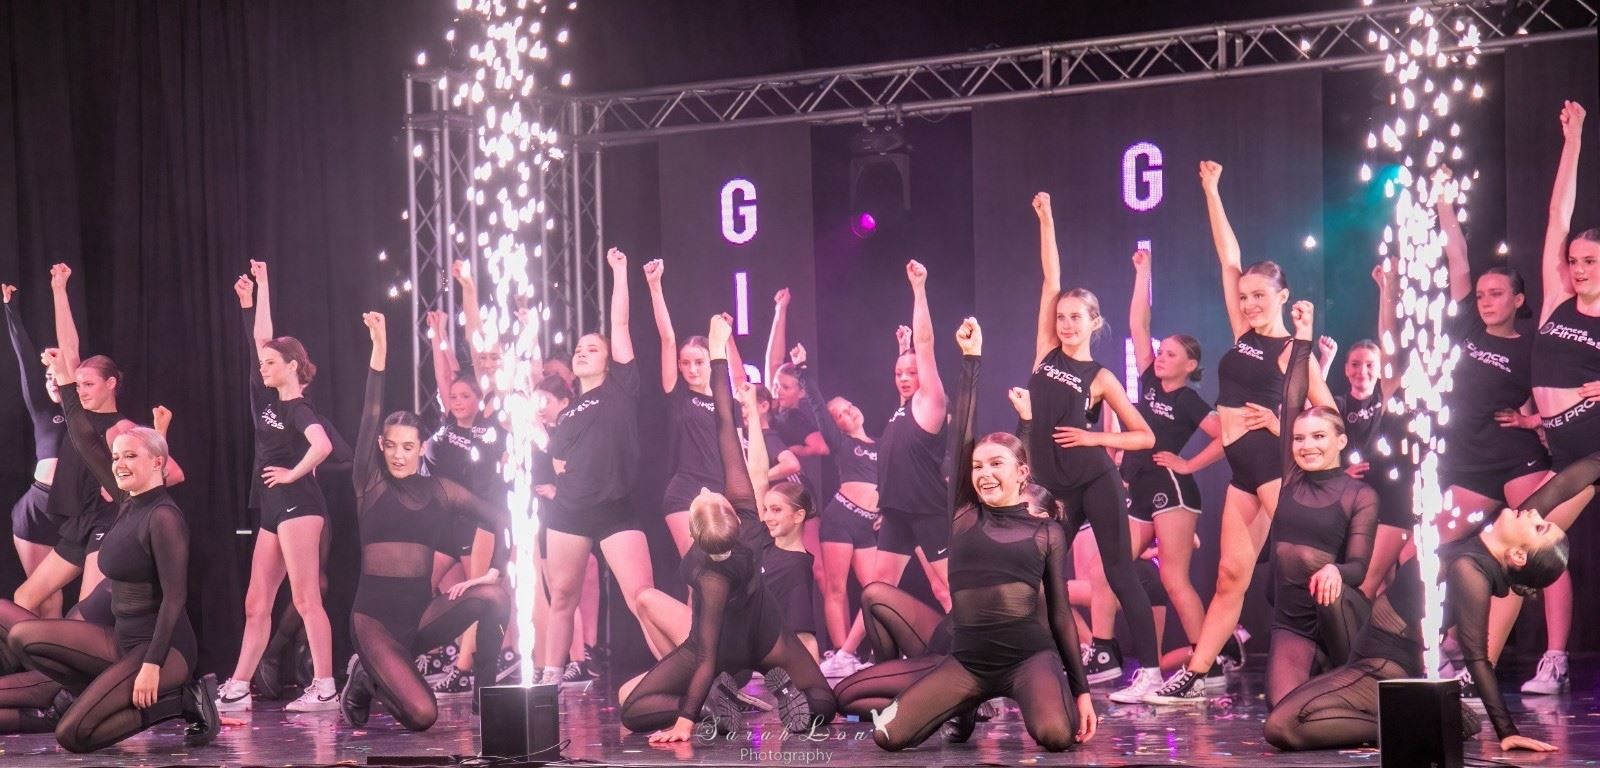 Members of the dance school perform last year in "Bring back my girls".